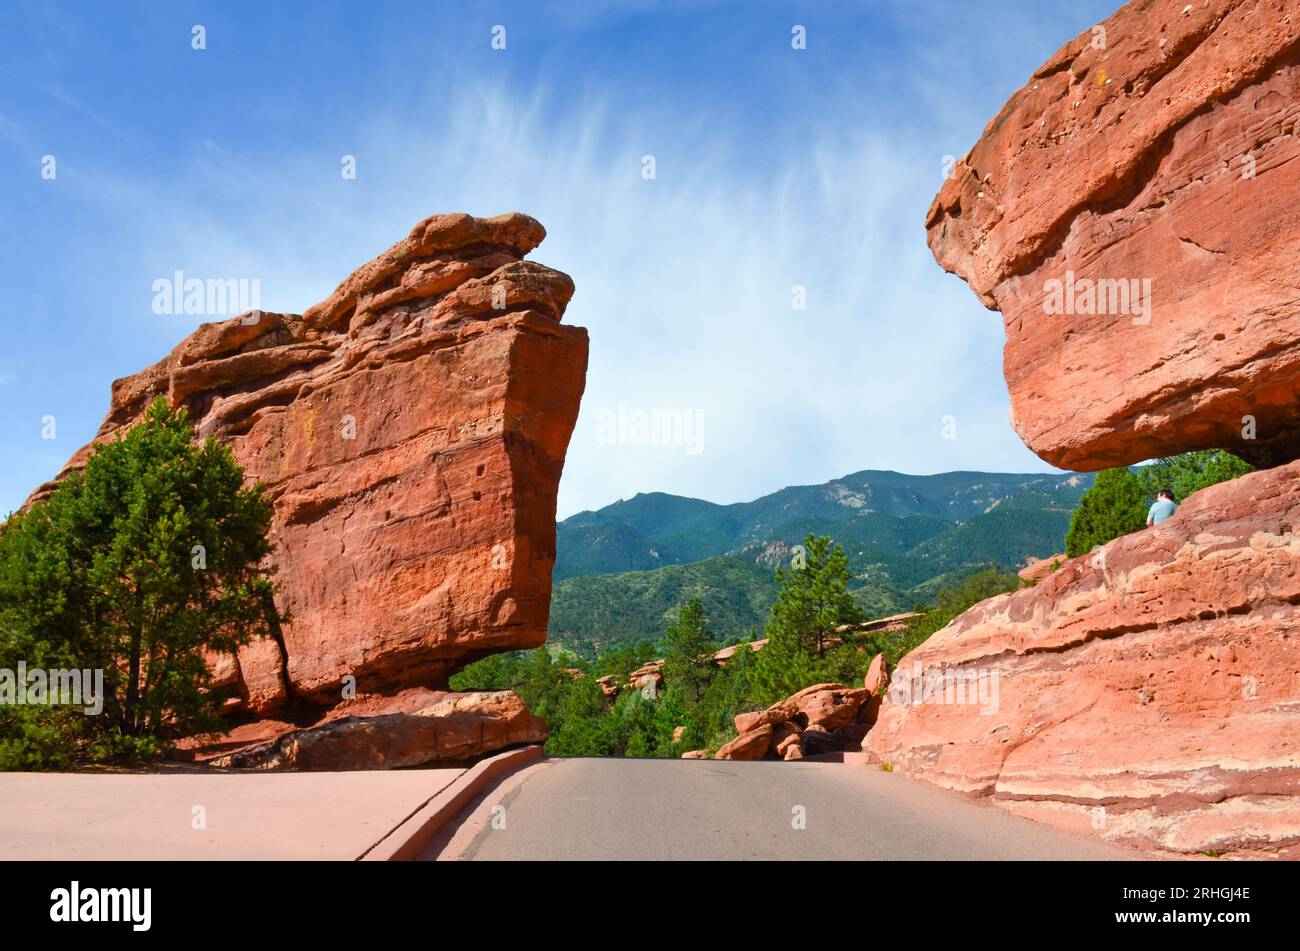 Red Rock formation on Balanced Rock roadside on Garden Dr in the Garden of the Gods. Colorado Springs, Colorado. USA. Stock Photo